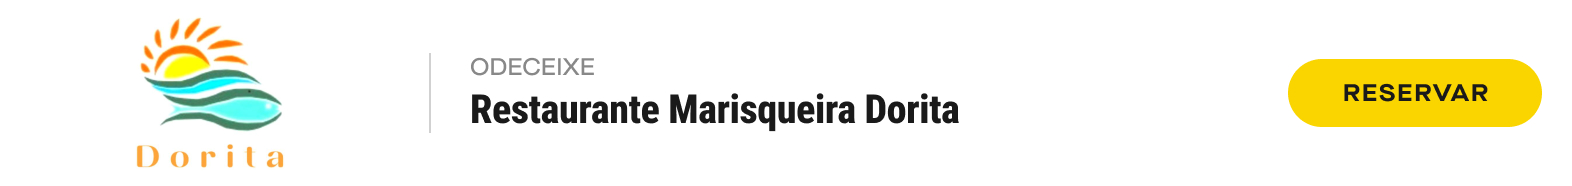 90.Desktop Restaurante Marisqueira Dorita Odeceixe